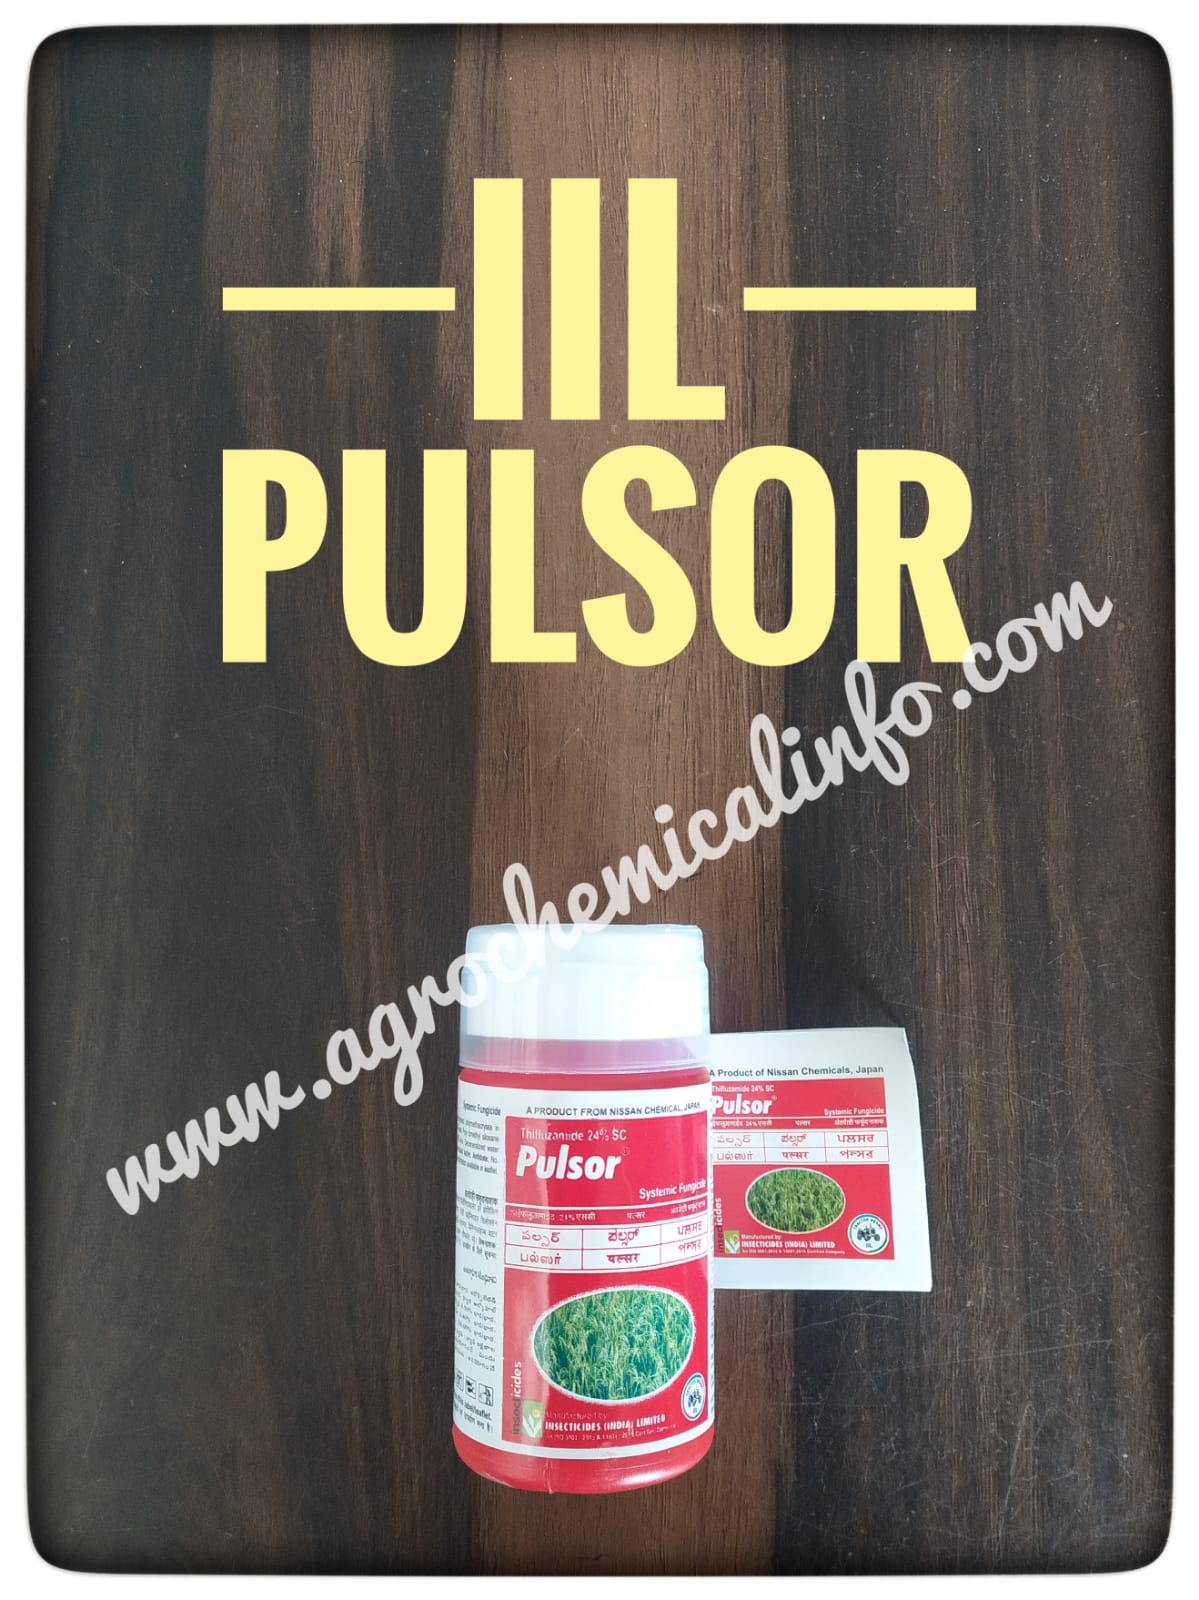 IIL Pulsor for Fungal Diseases